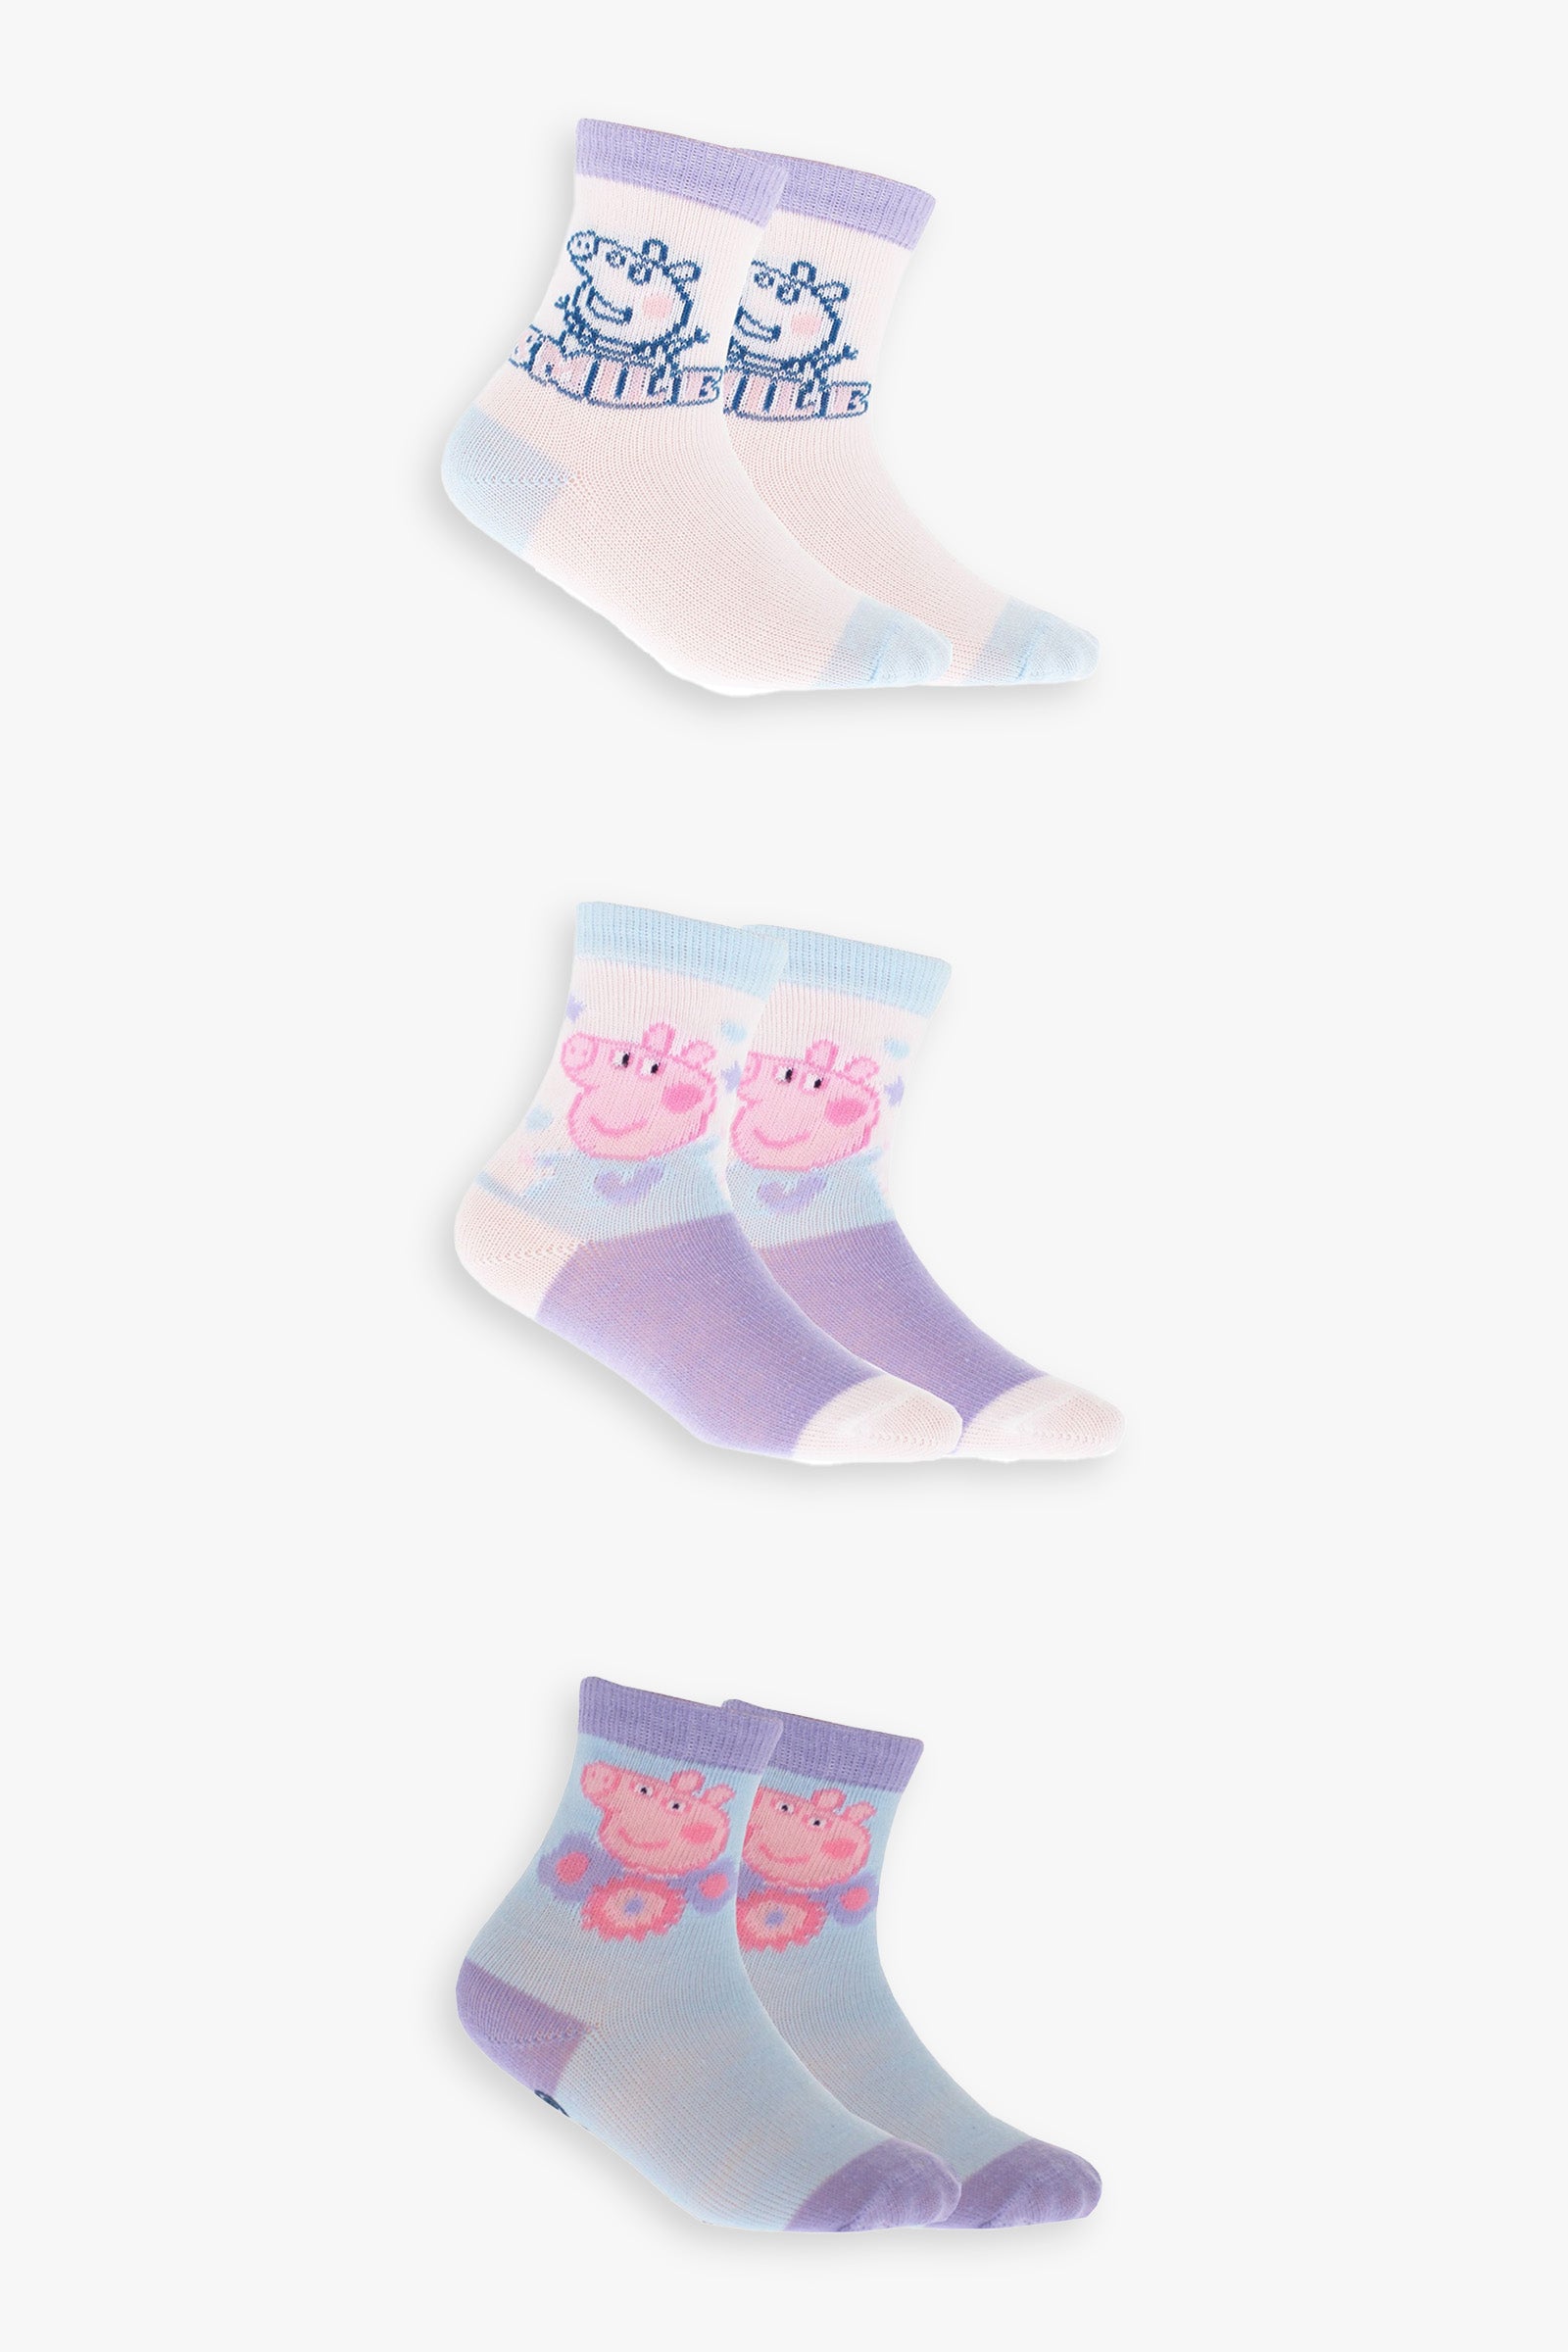 Gertex Peppa Pig 3 Pack Infant Crew Socks | 12-24 Months